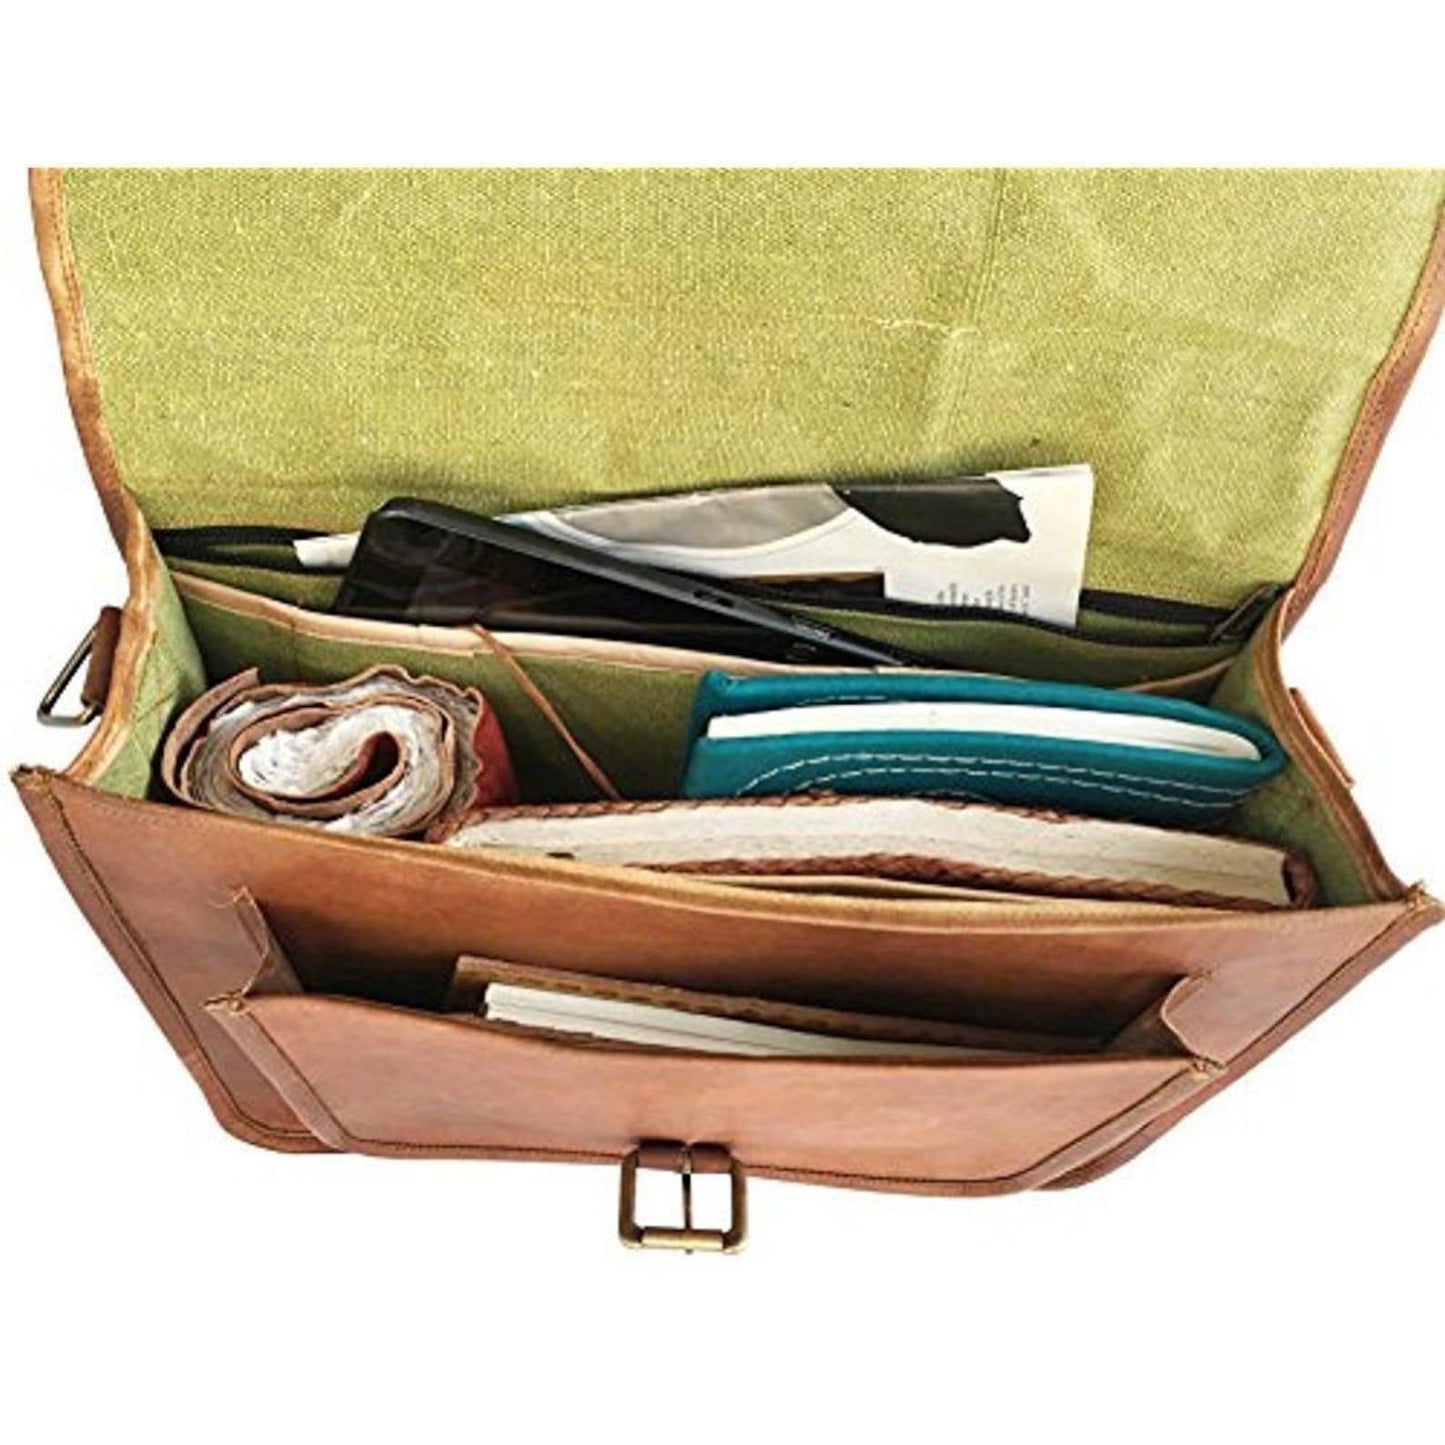 Men's Handmade Vintage Brown Goat Leather Laptop Briefcase (15")